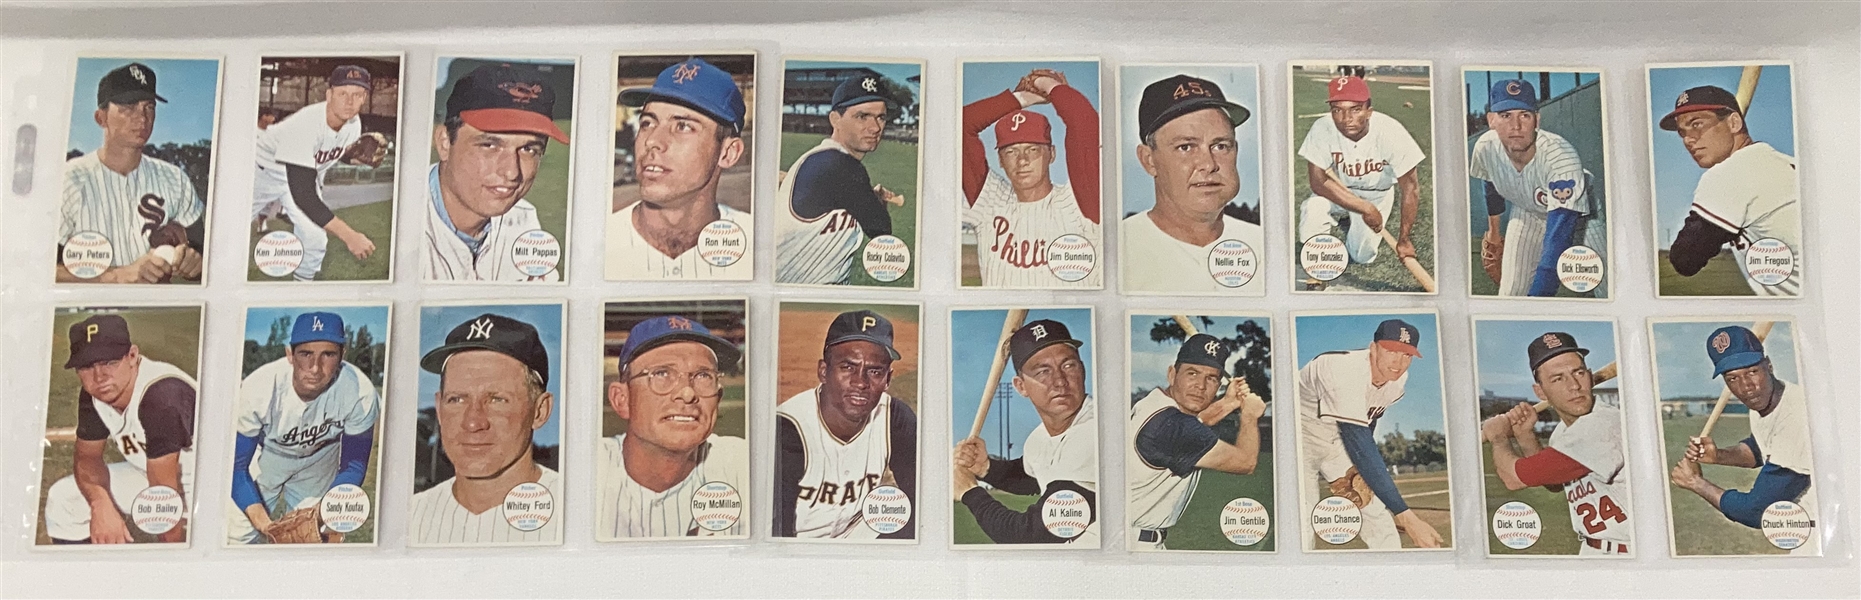 1964 Topps Giants Baseball Card Set w/ 1954-55 Era Milwaukee County Stadium & Comiskey Park 8x10 Player Photos 